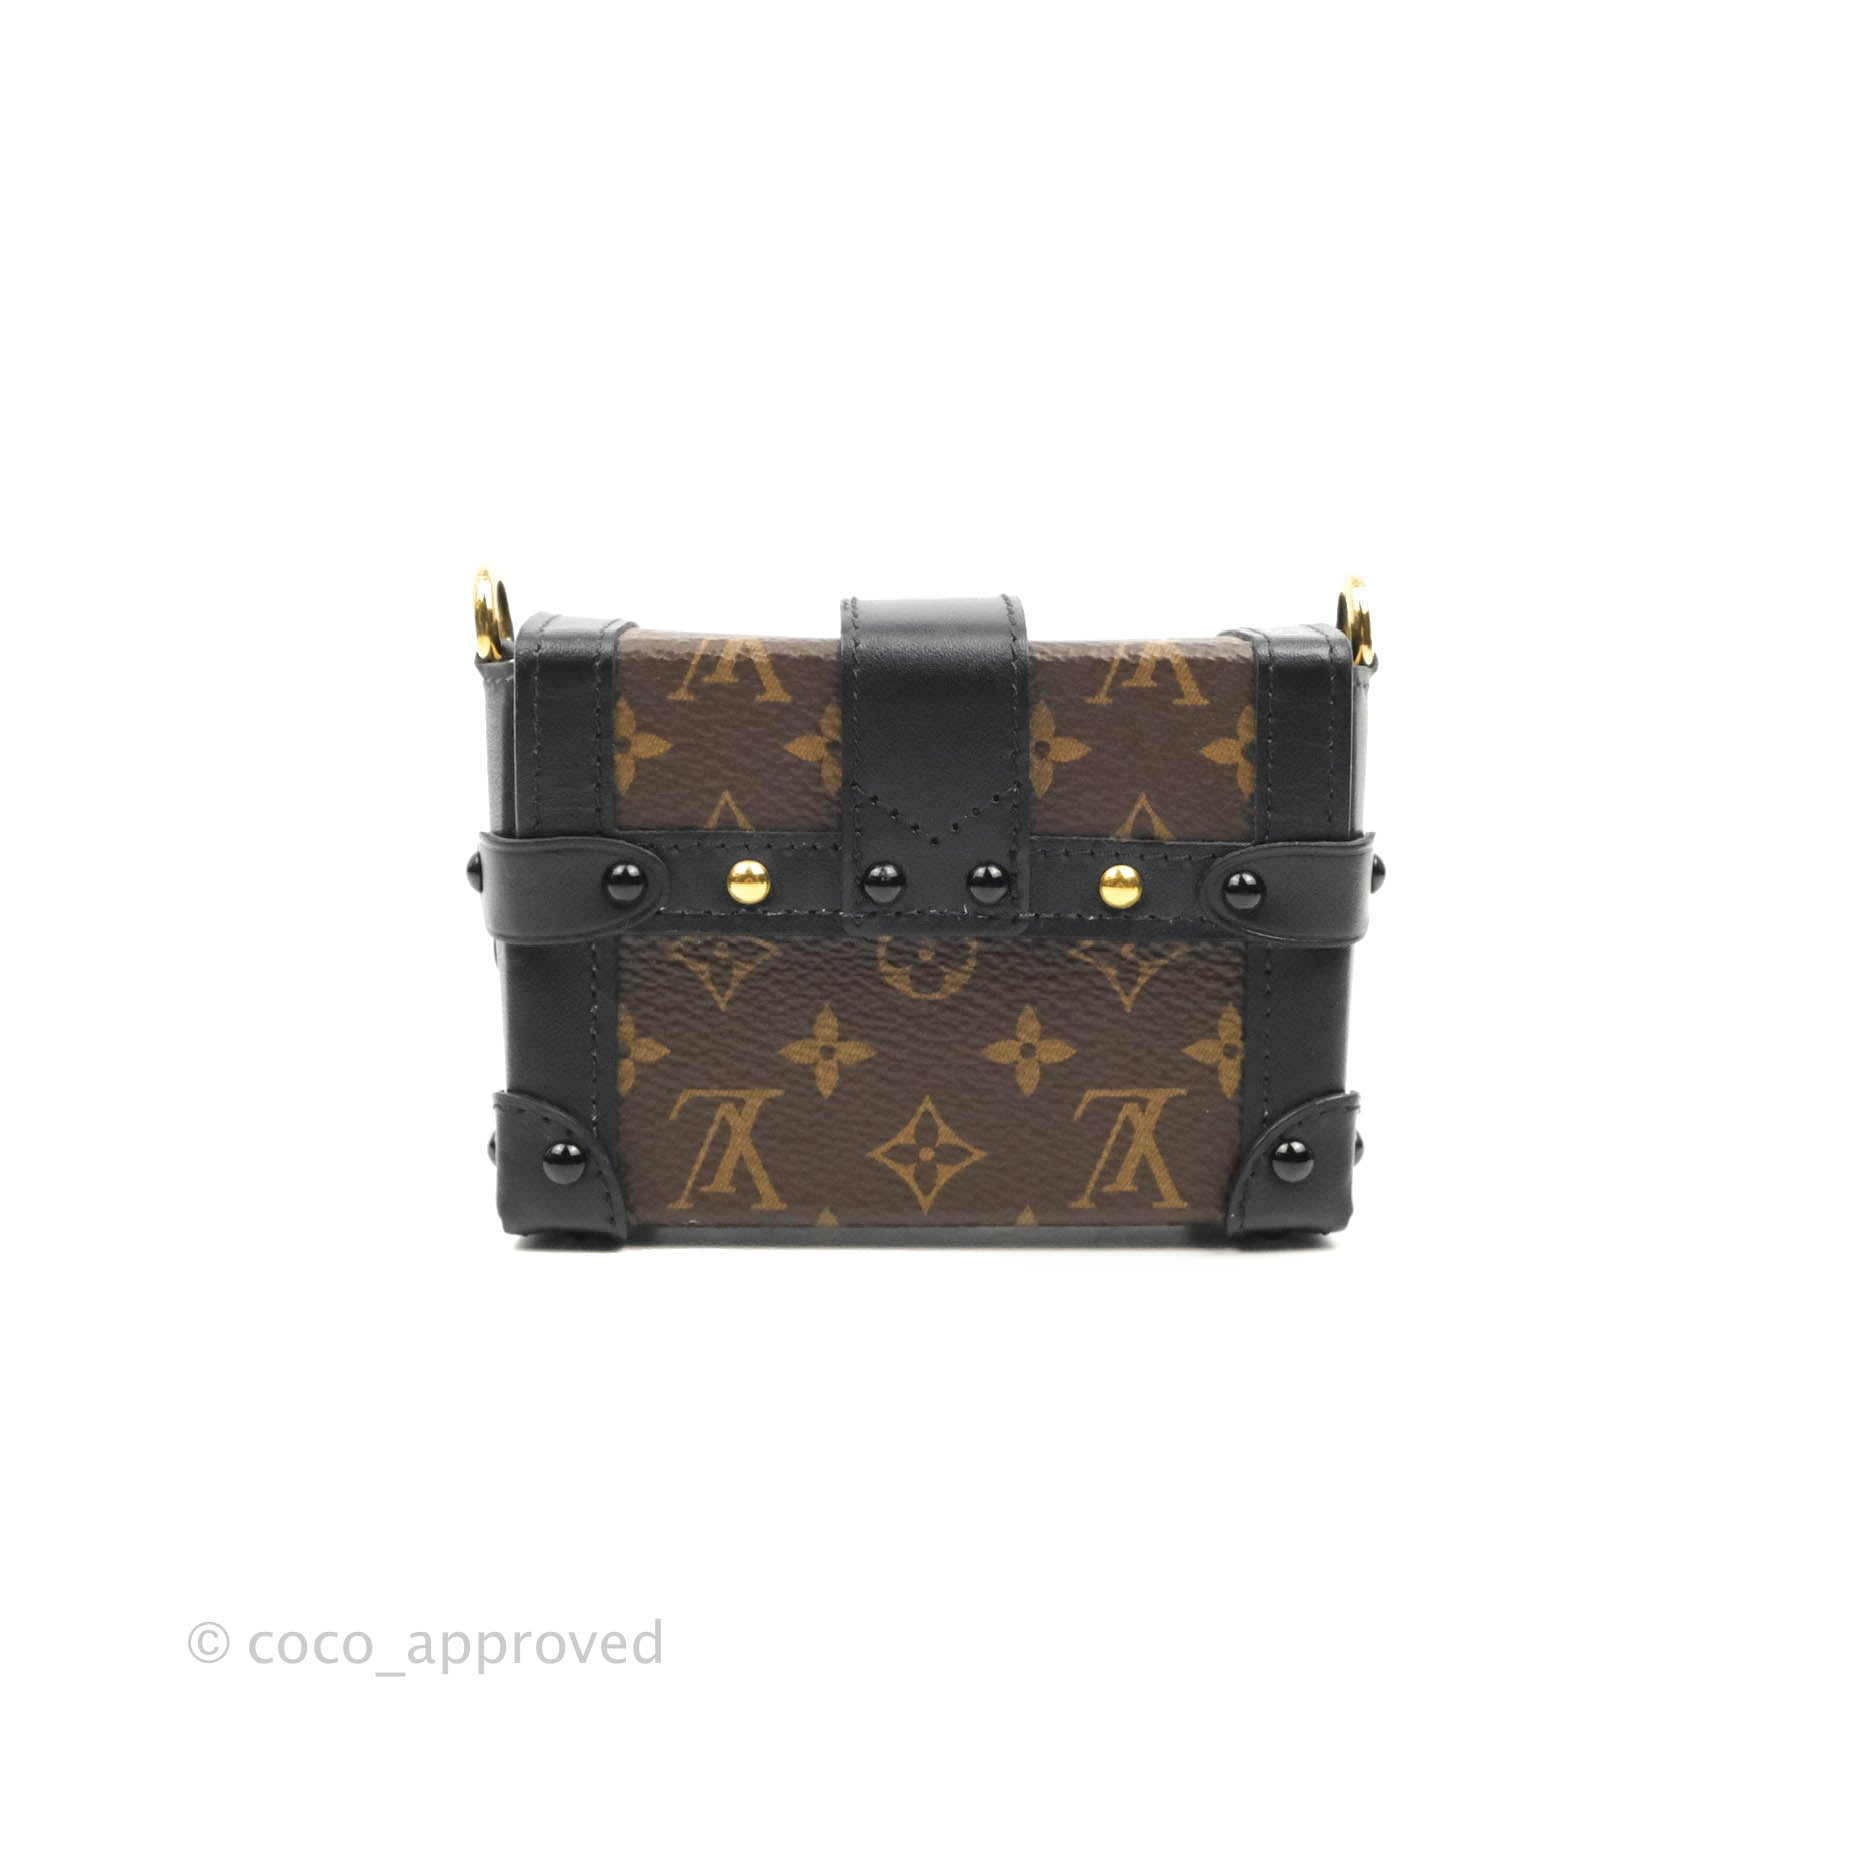 Louis Vuitton essential trunk monogram mini bag charm for petite